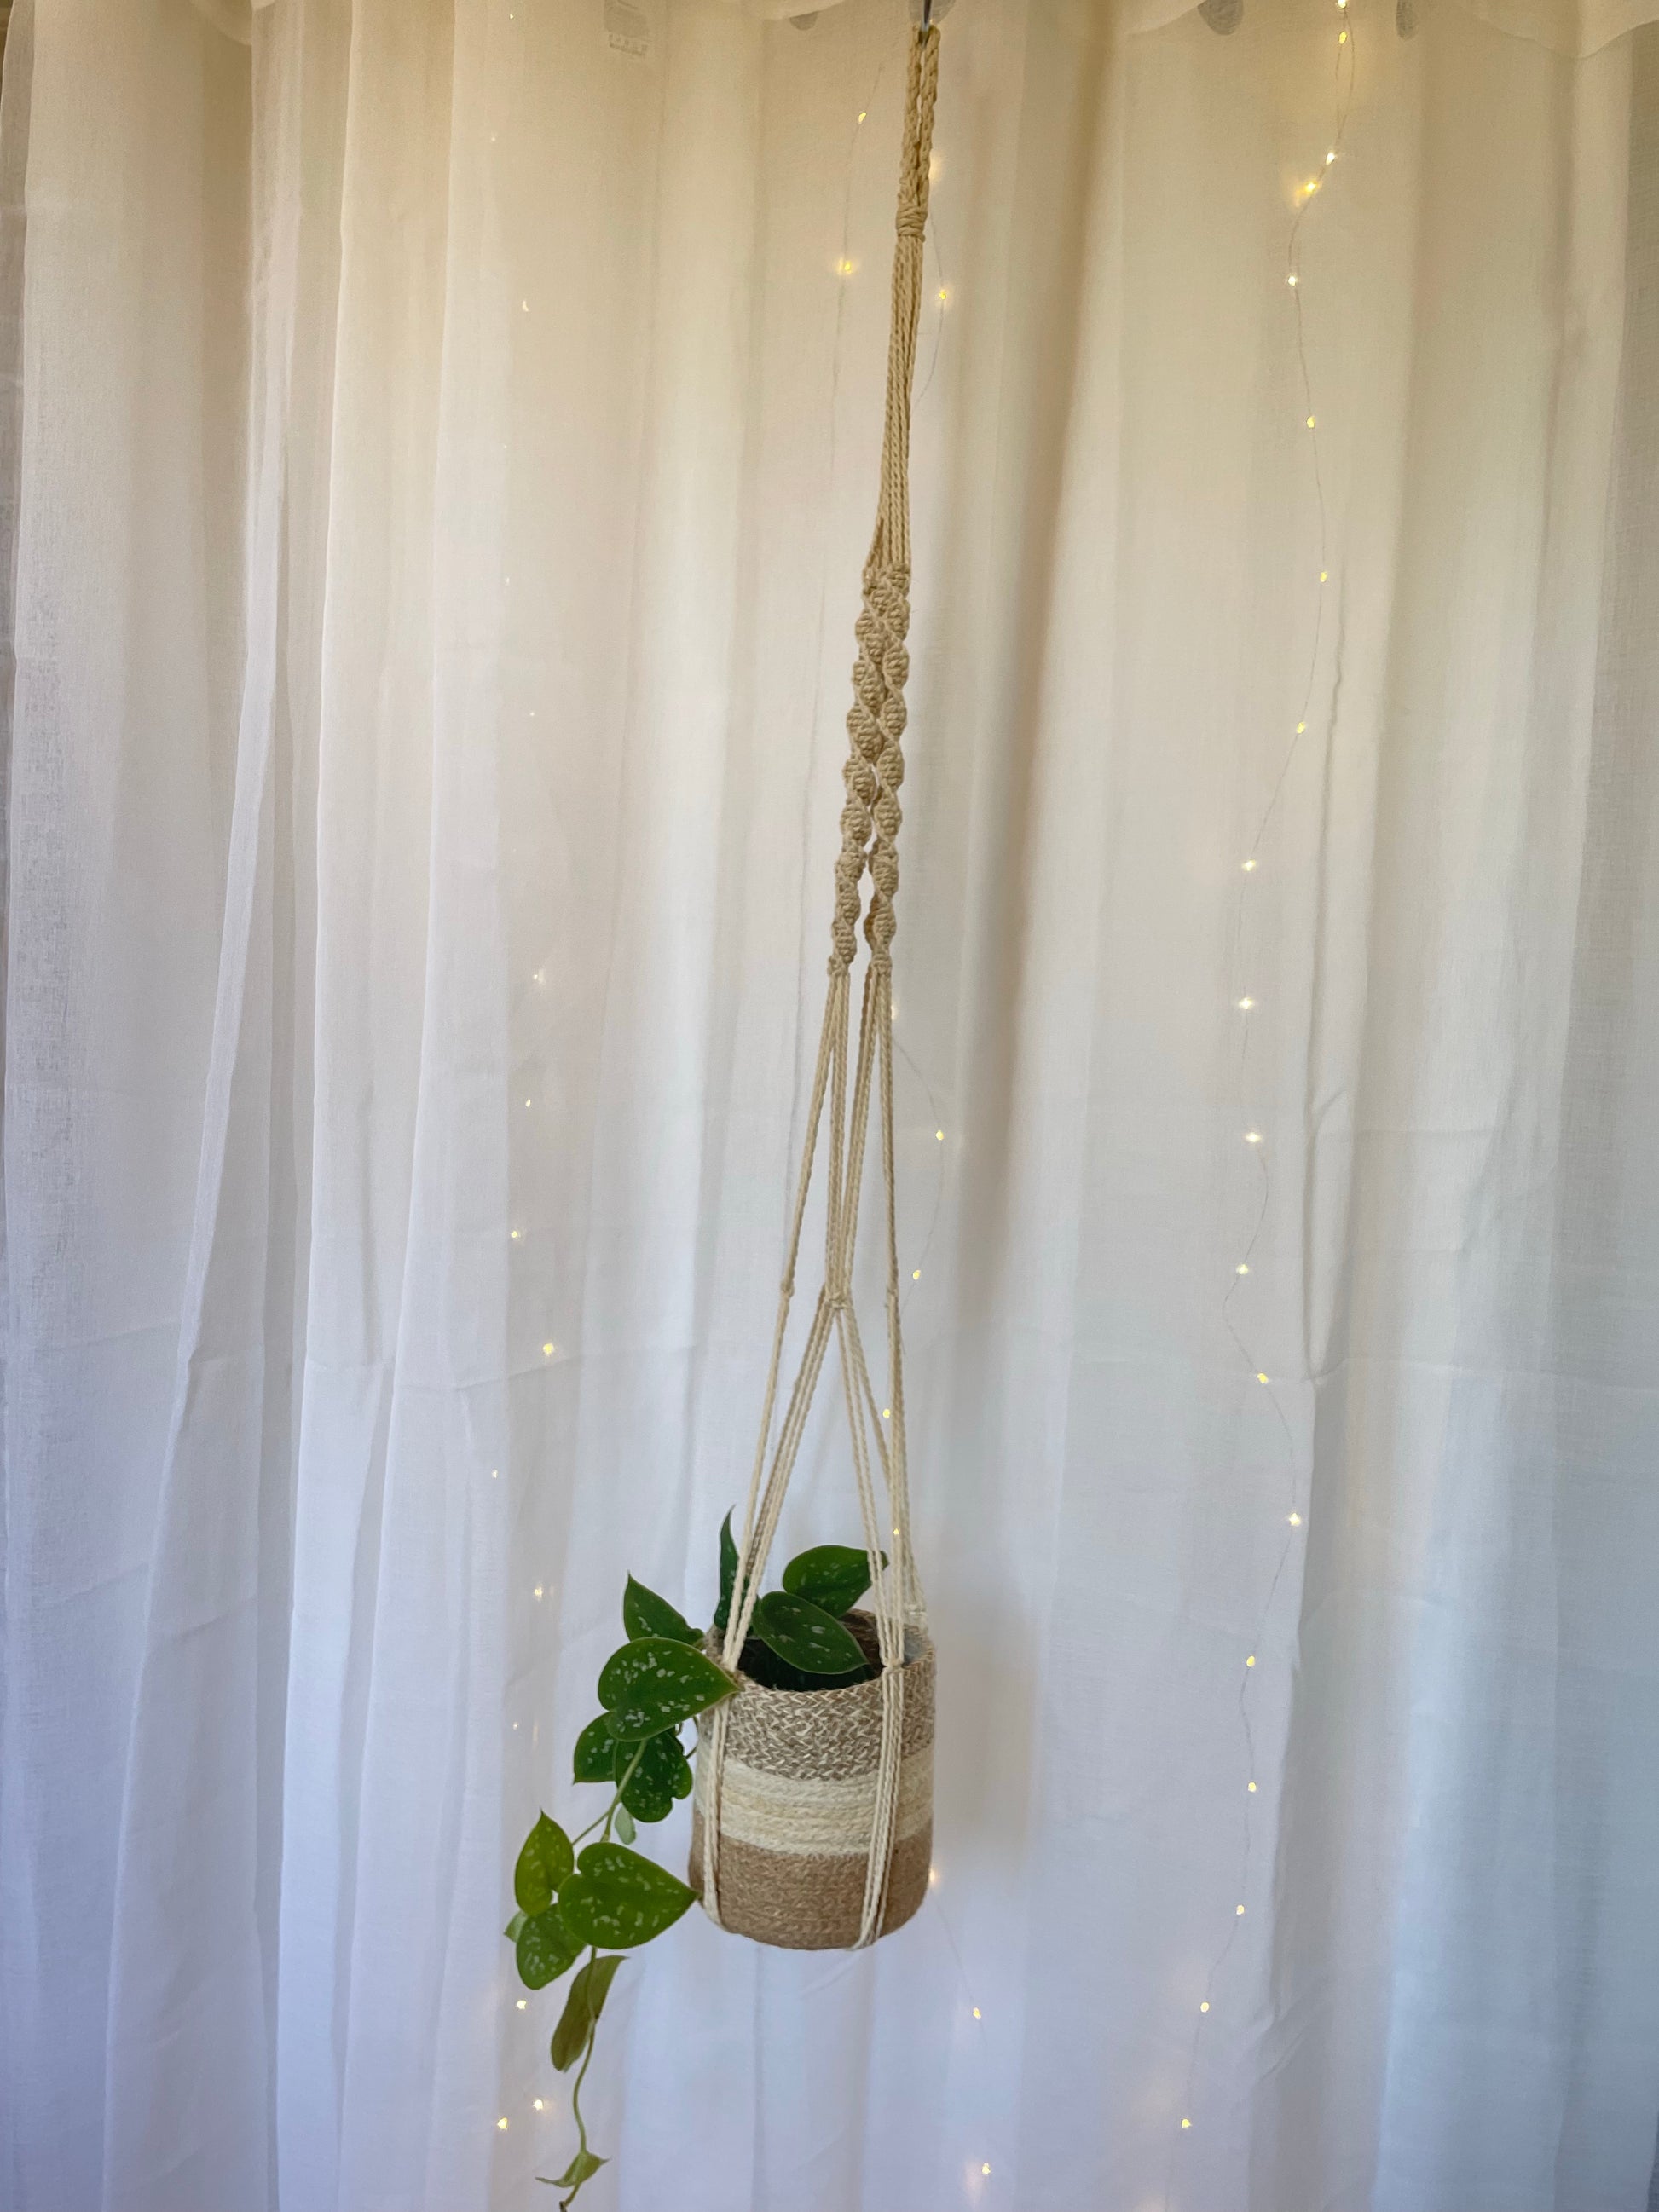 Twisted Macramé Indoor Plant Pot Hanger 120cm Boho Chic Décor Home Garden